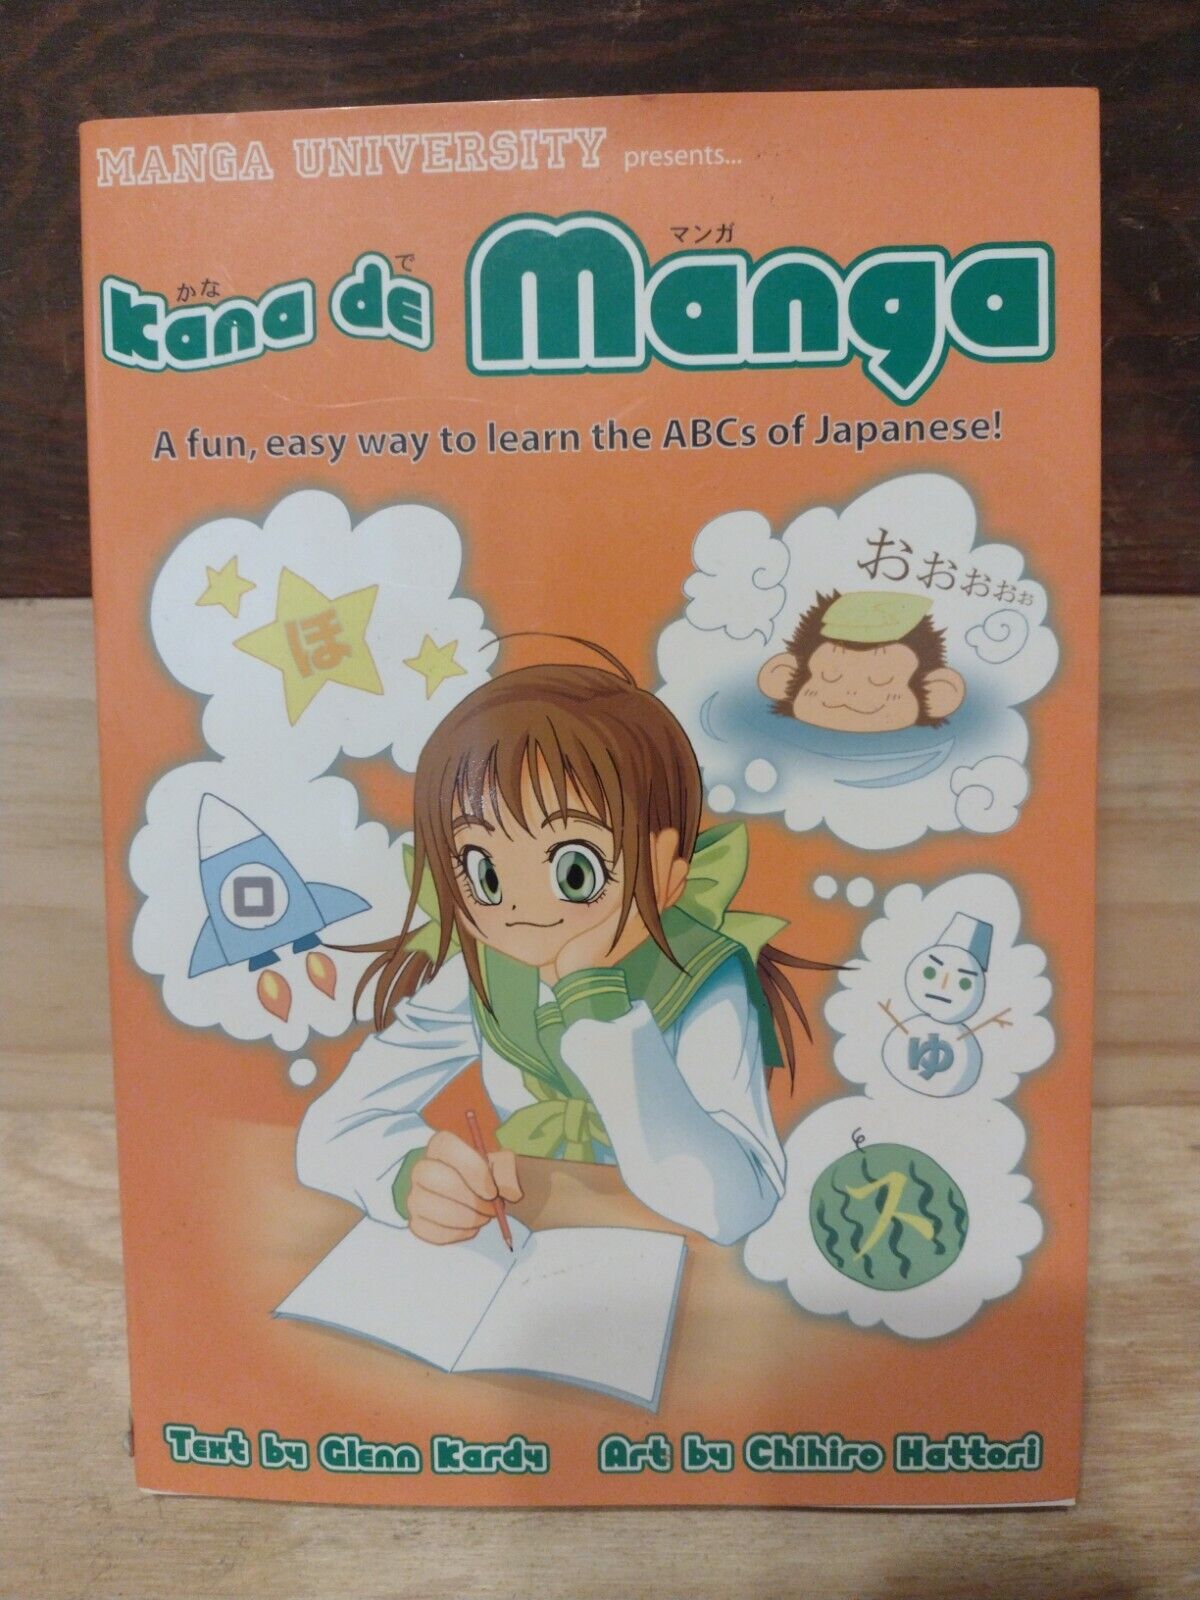 Kana De Manga: The Fun, Easy Way To Learn The ABCs of Japanese (Manga University